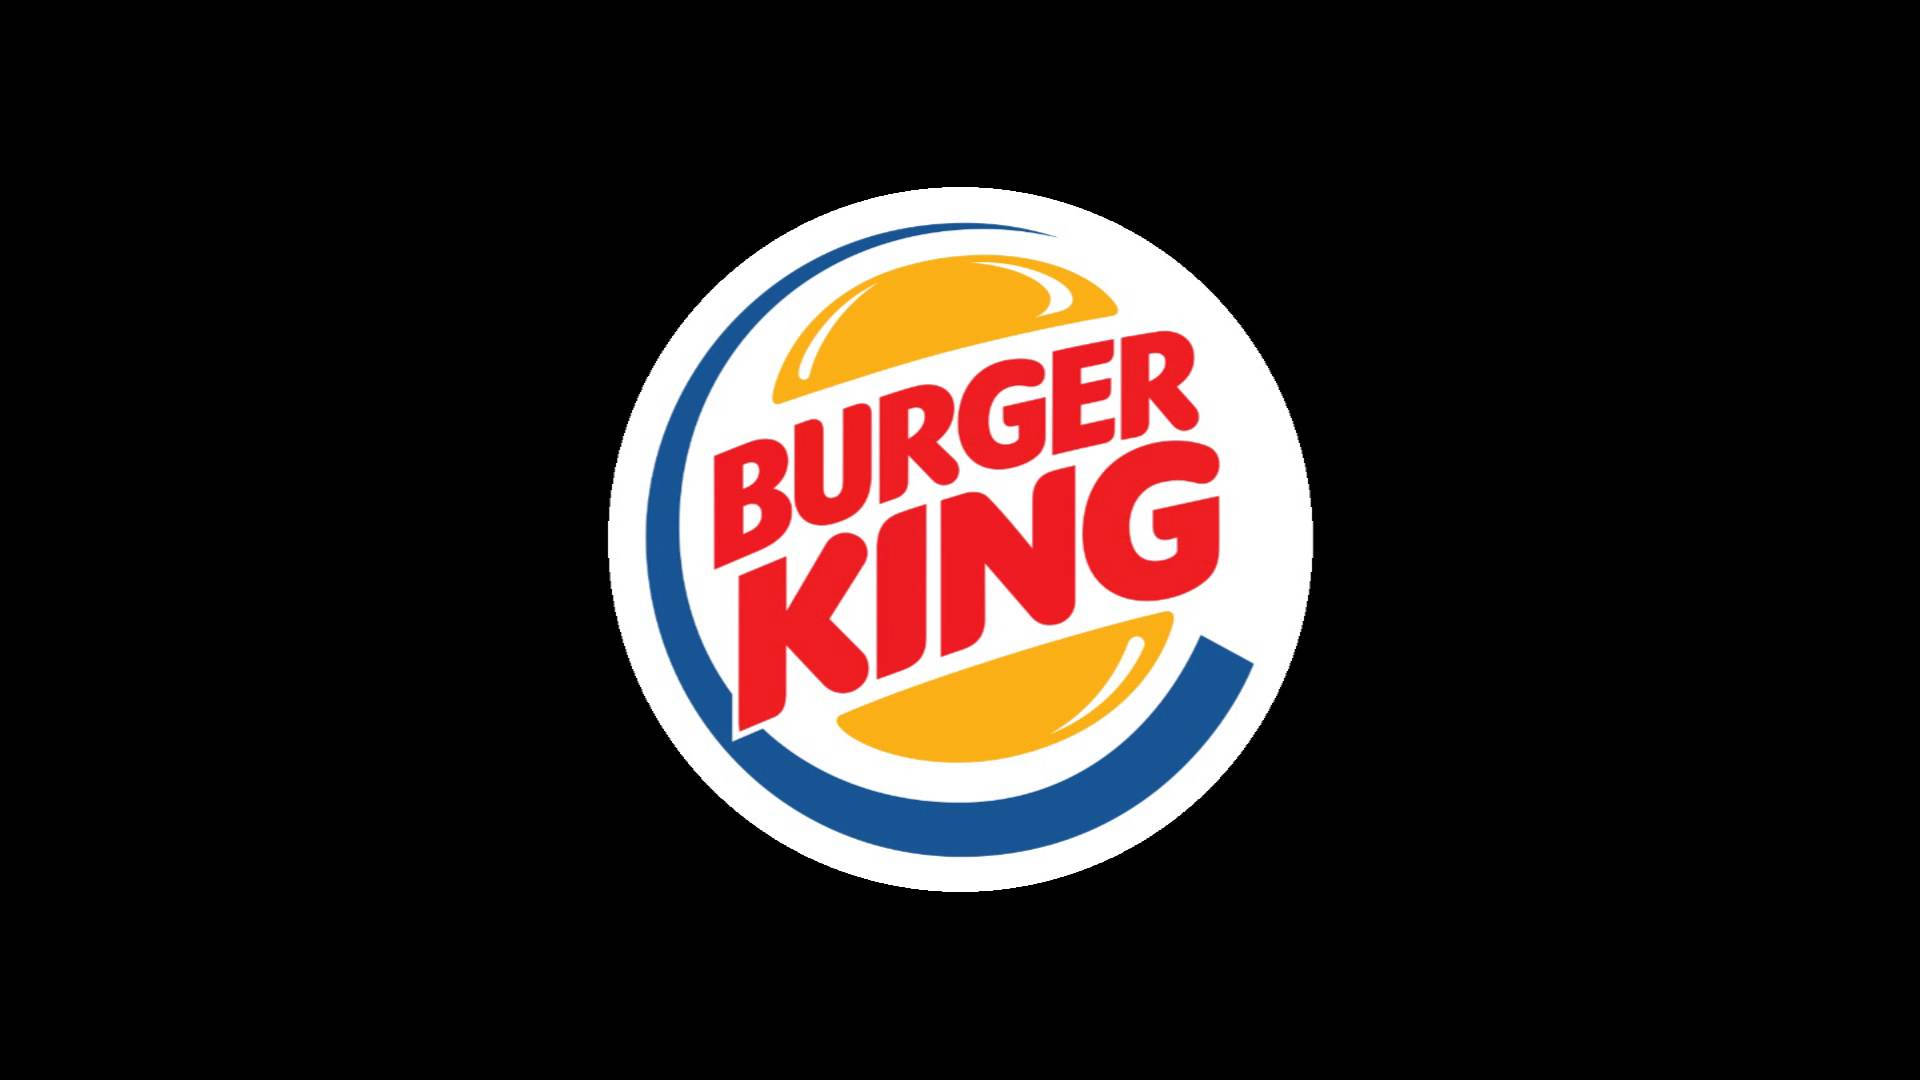 Burger King Logo On Black Wallpaper